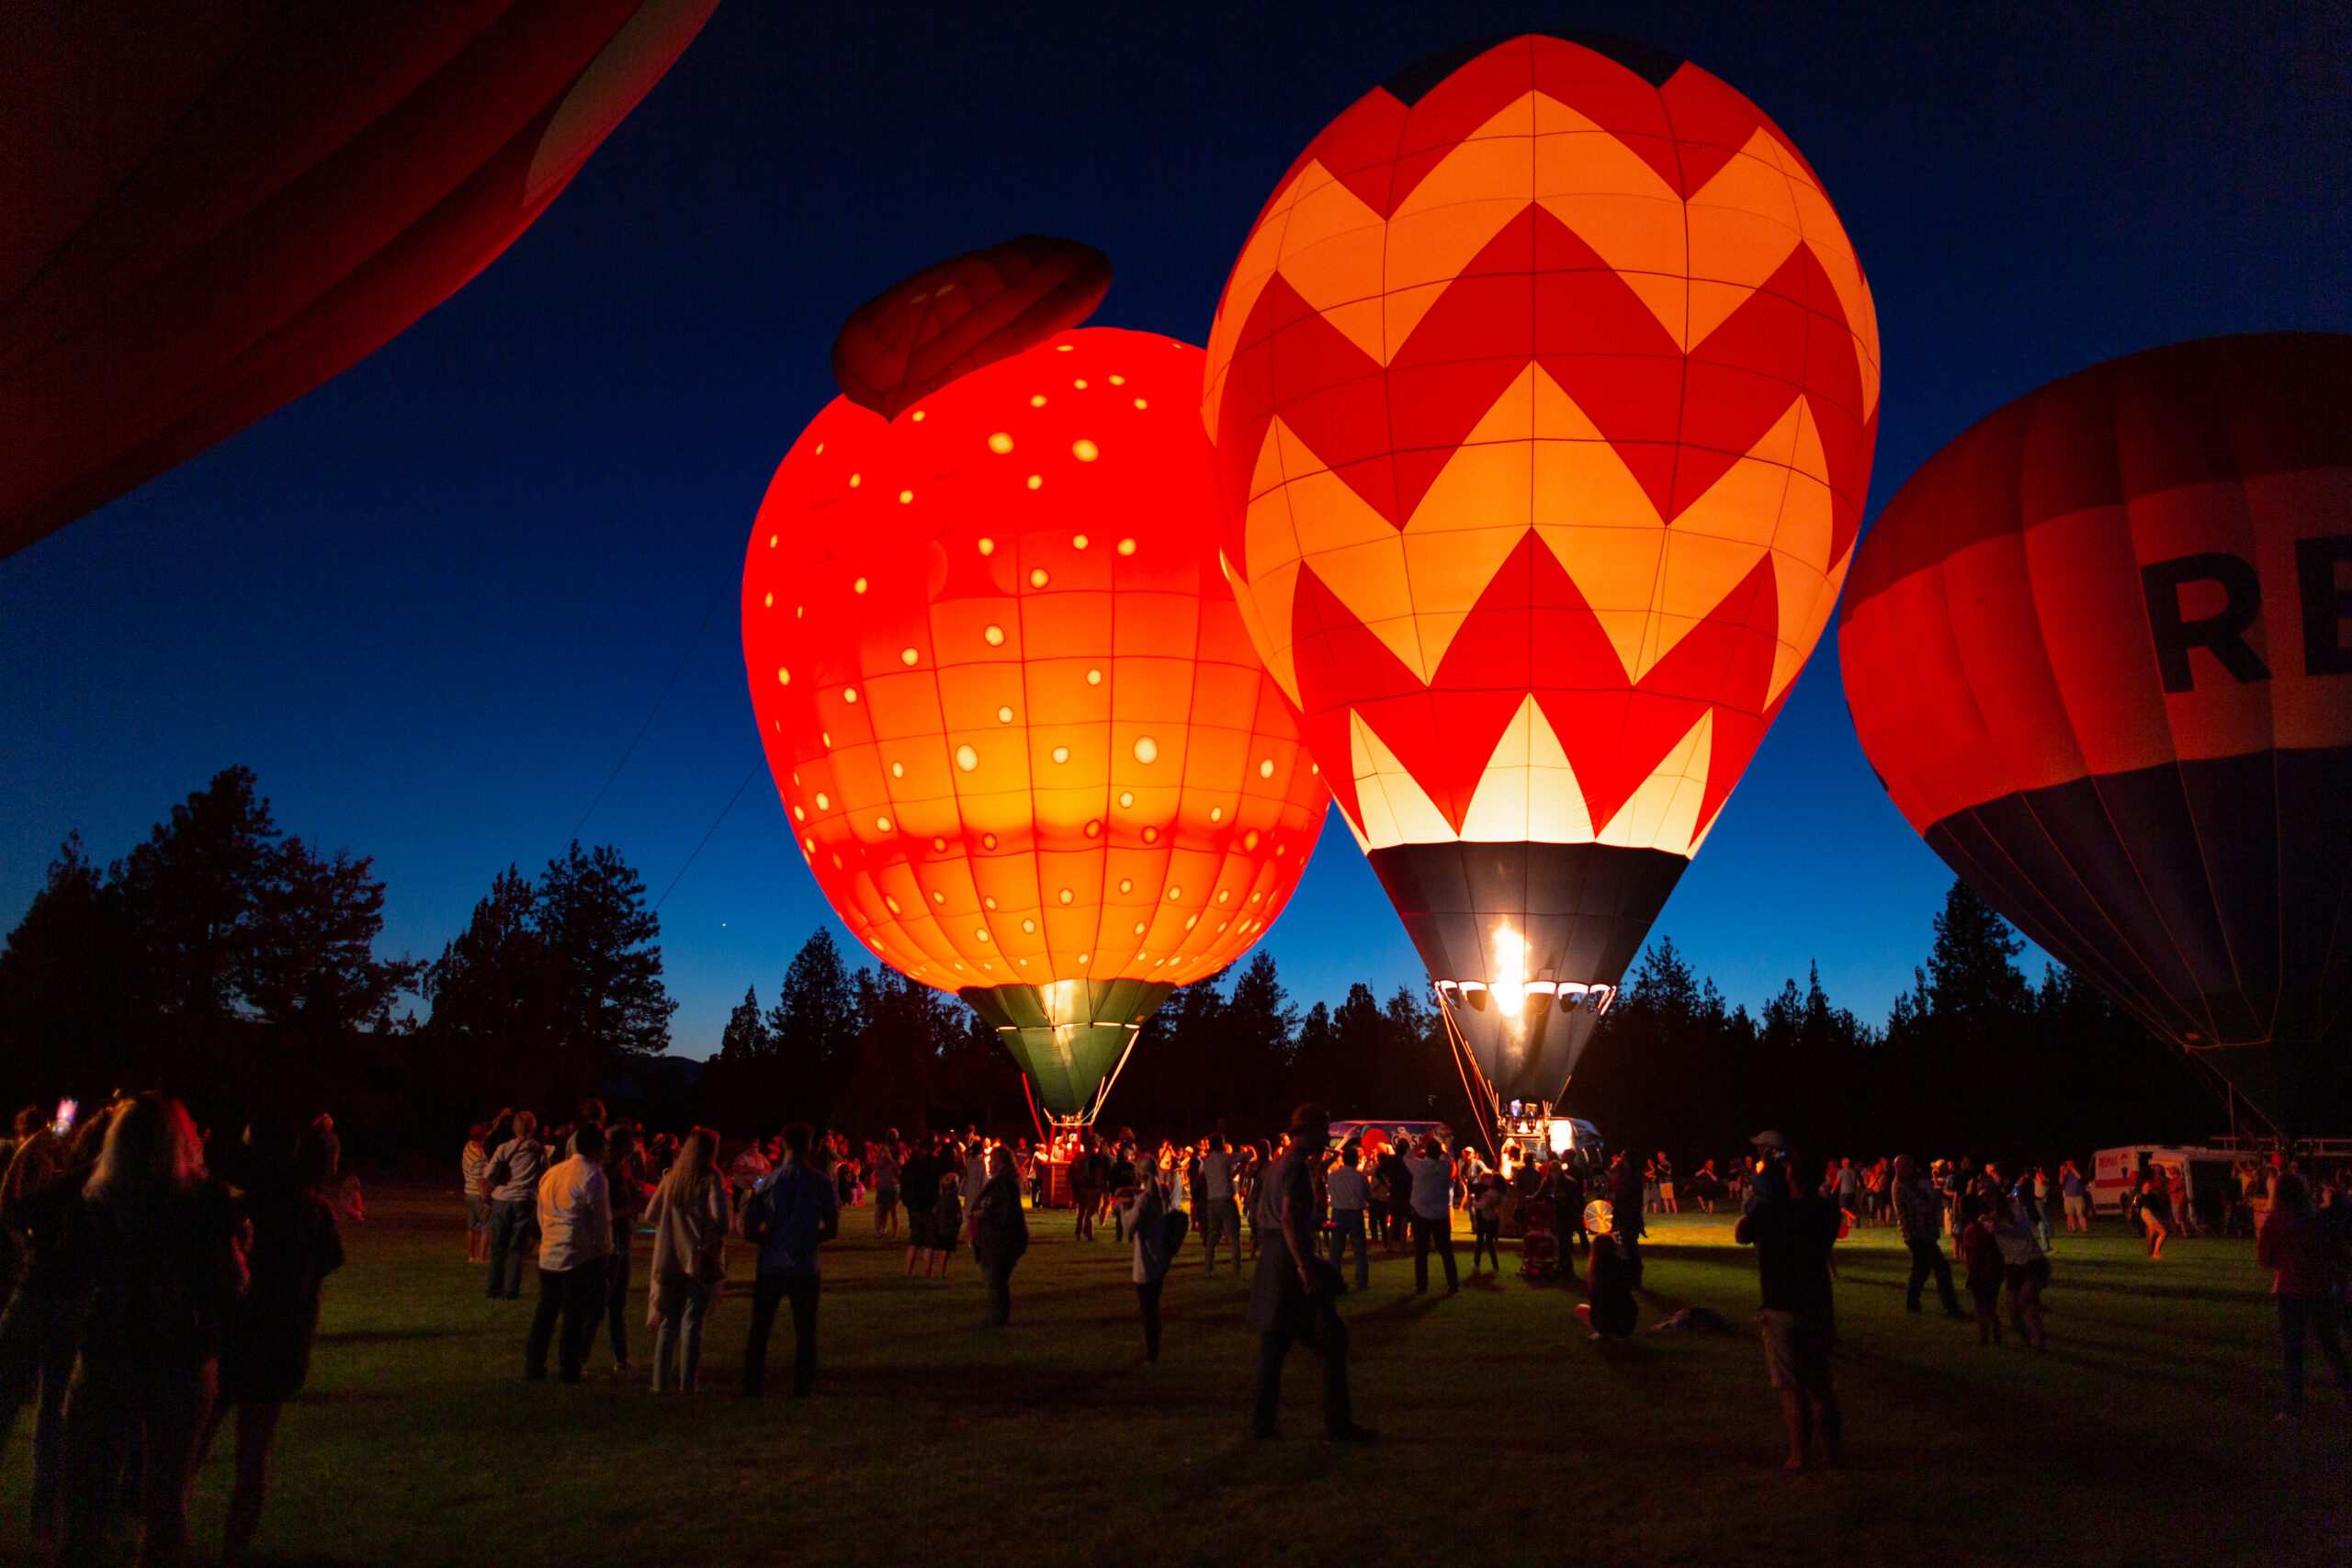 Video: When A Hot Air Balloon Becomes A Brand Ambassador